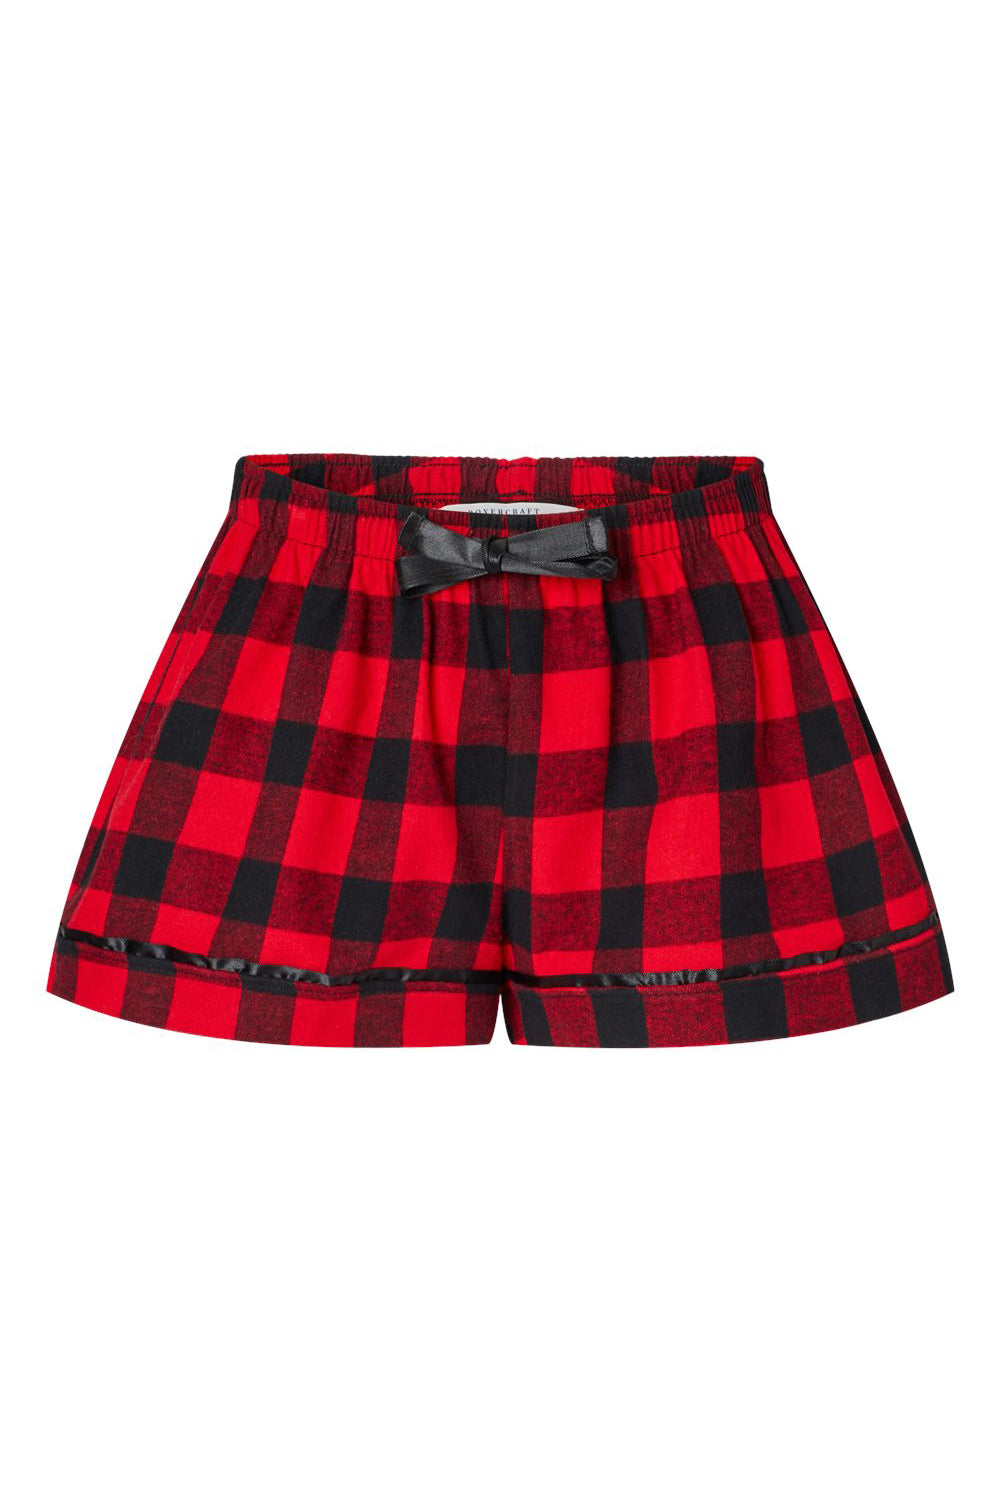 Boxercraft BW6501 Womens Flannel Shorts Red/Black Buffalo Flat Front